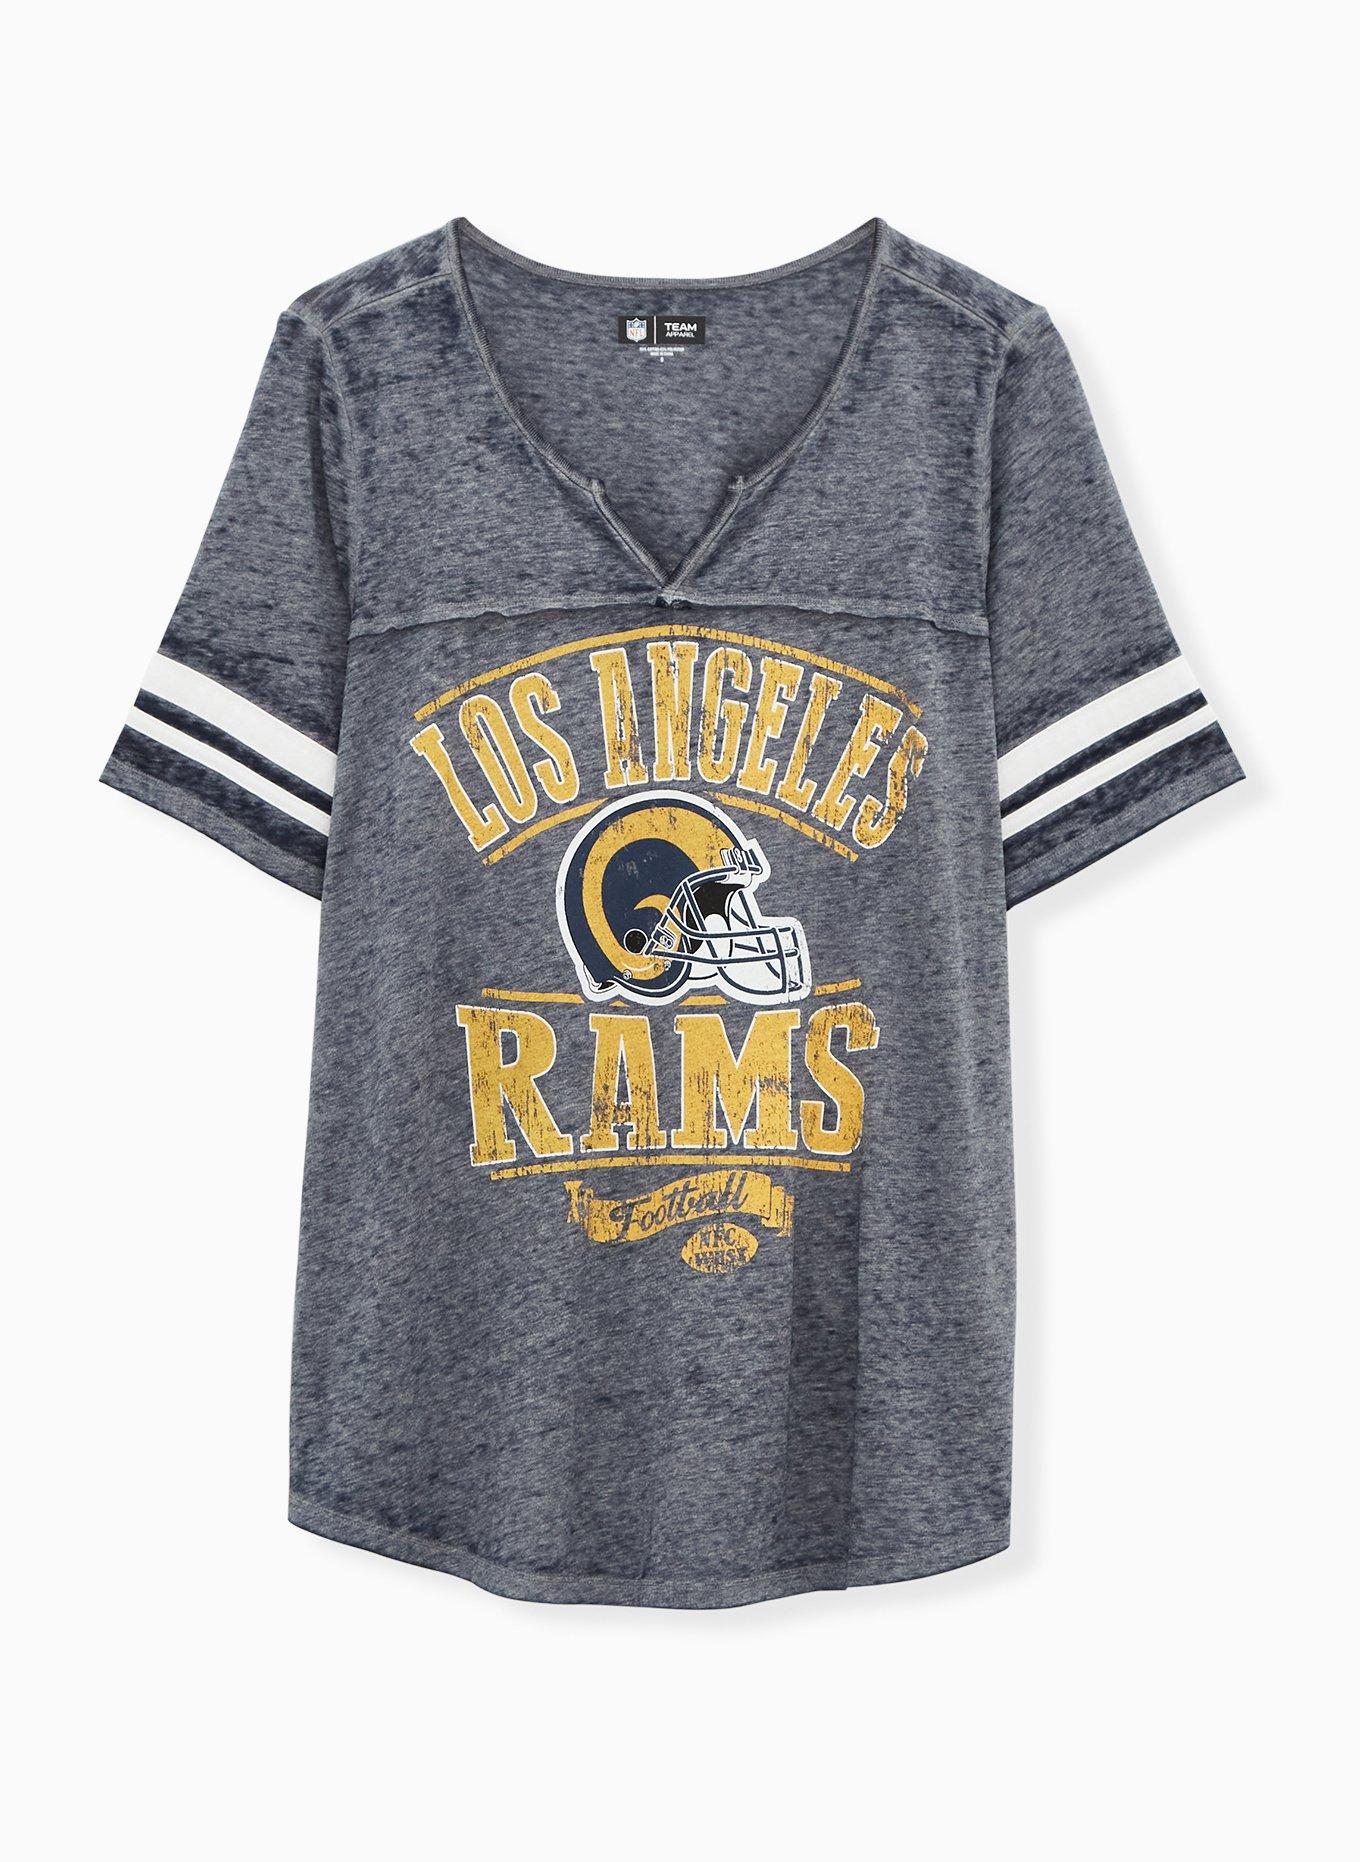 Los Angeles Rams Helmet Fan Lover shirt Rams Football Shirt Sports Teams tee